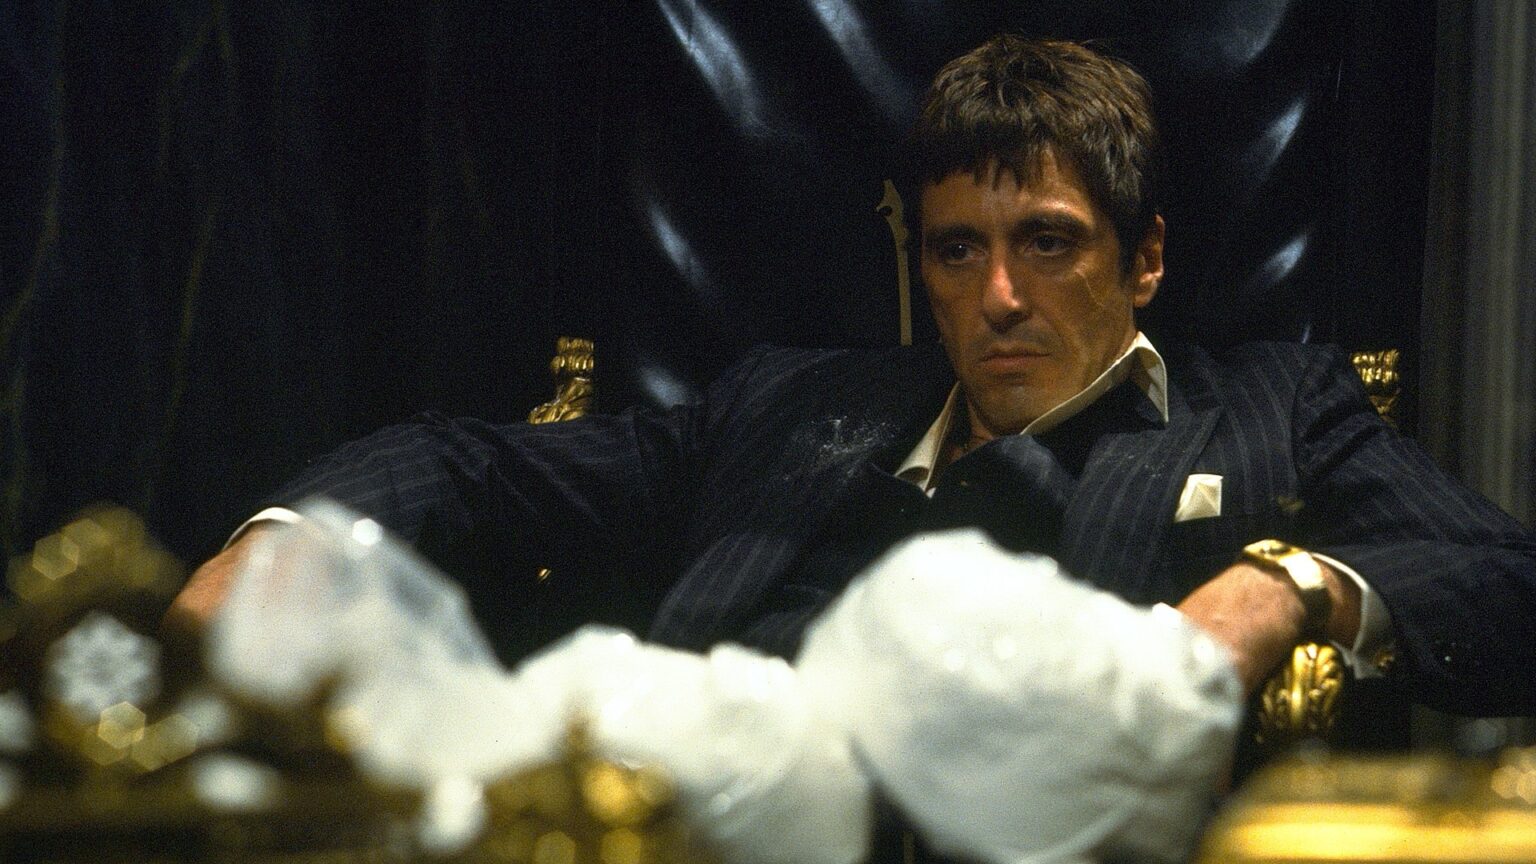 Al Pacino nei panni di Tony Montana